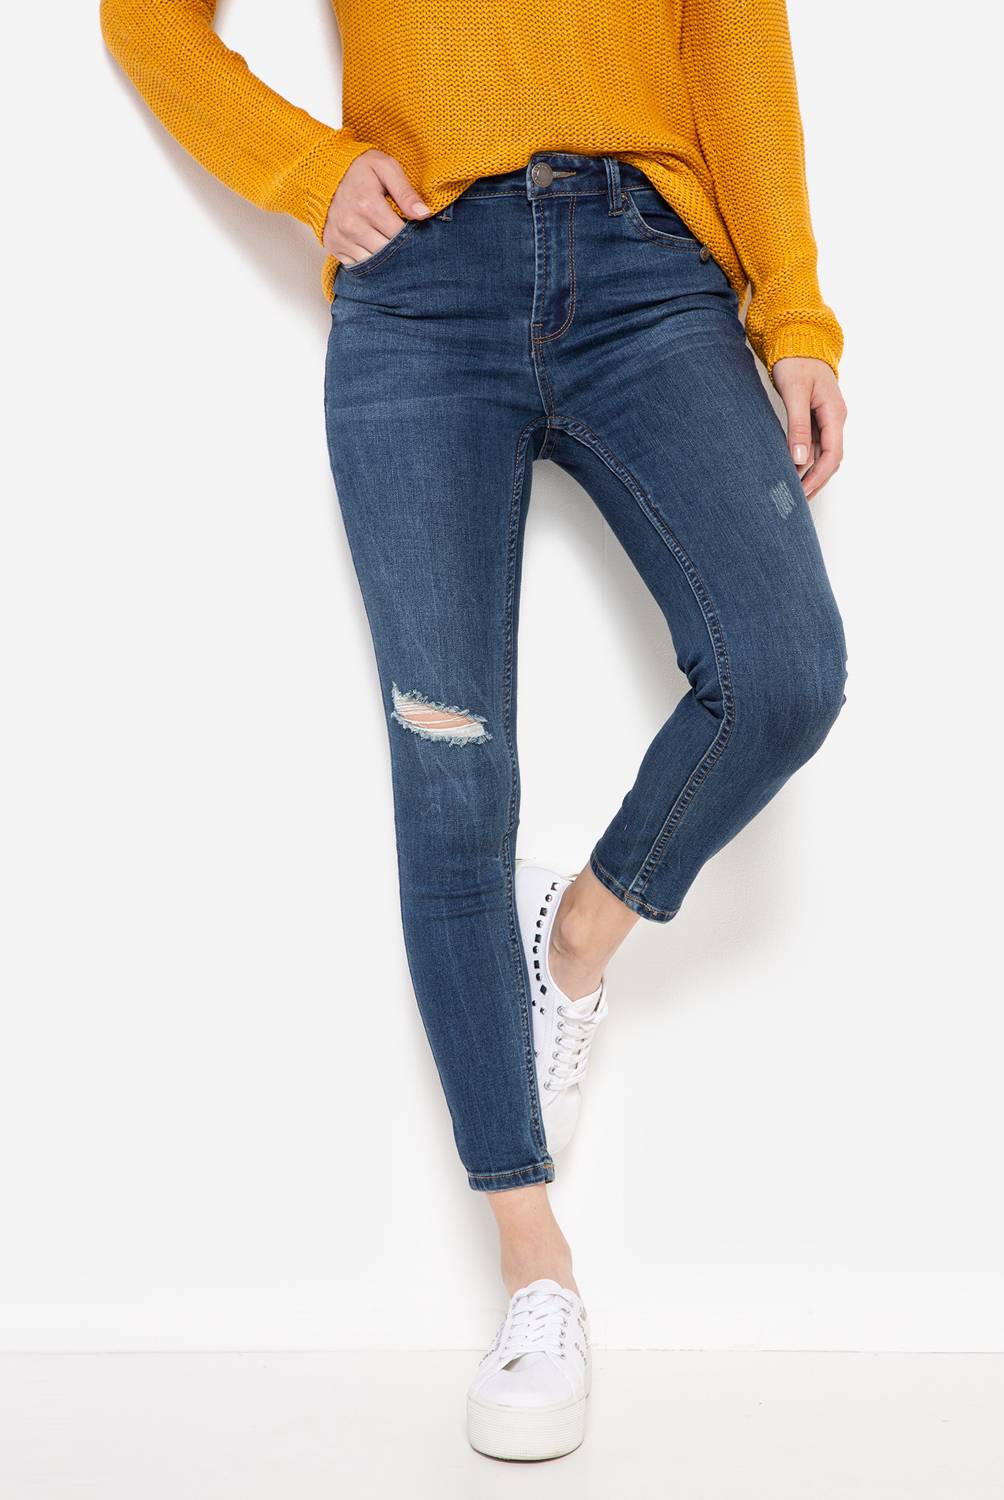 Americanino - Jeans